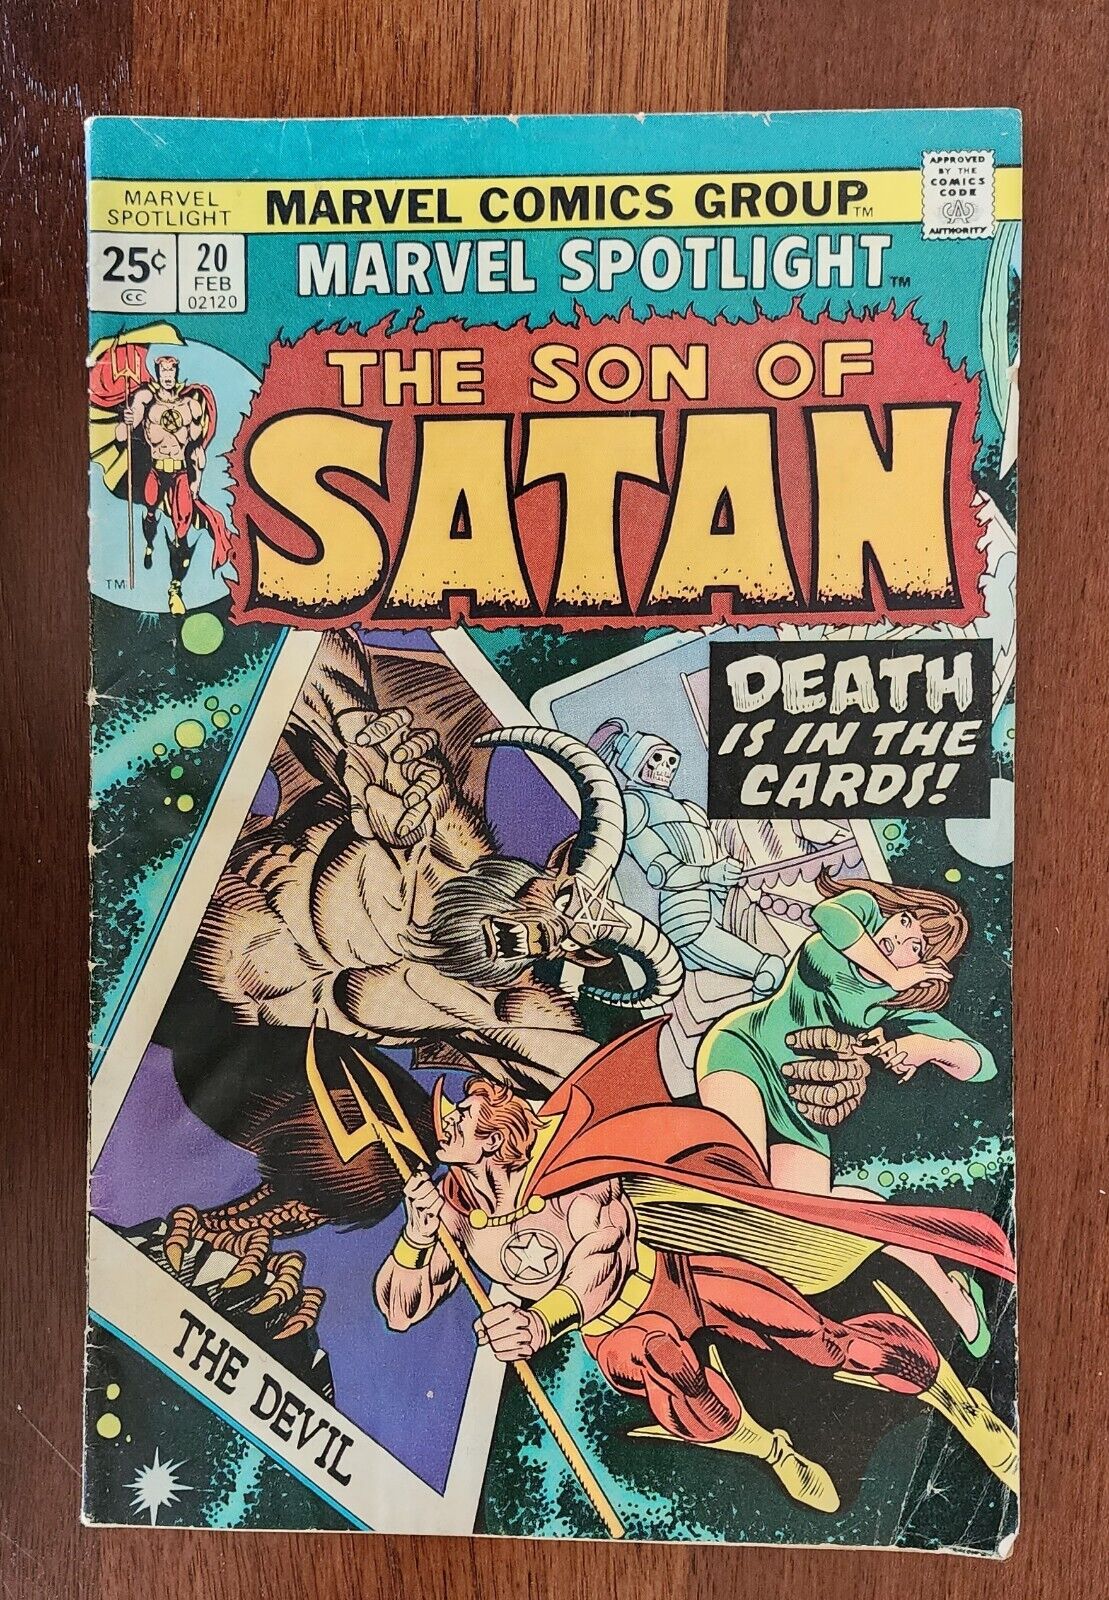 MARVEL SPOTLIGHT #20 (Marvel Comics 1973) -- Bronze Age Son of Satan -- FN+